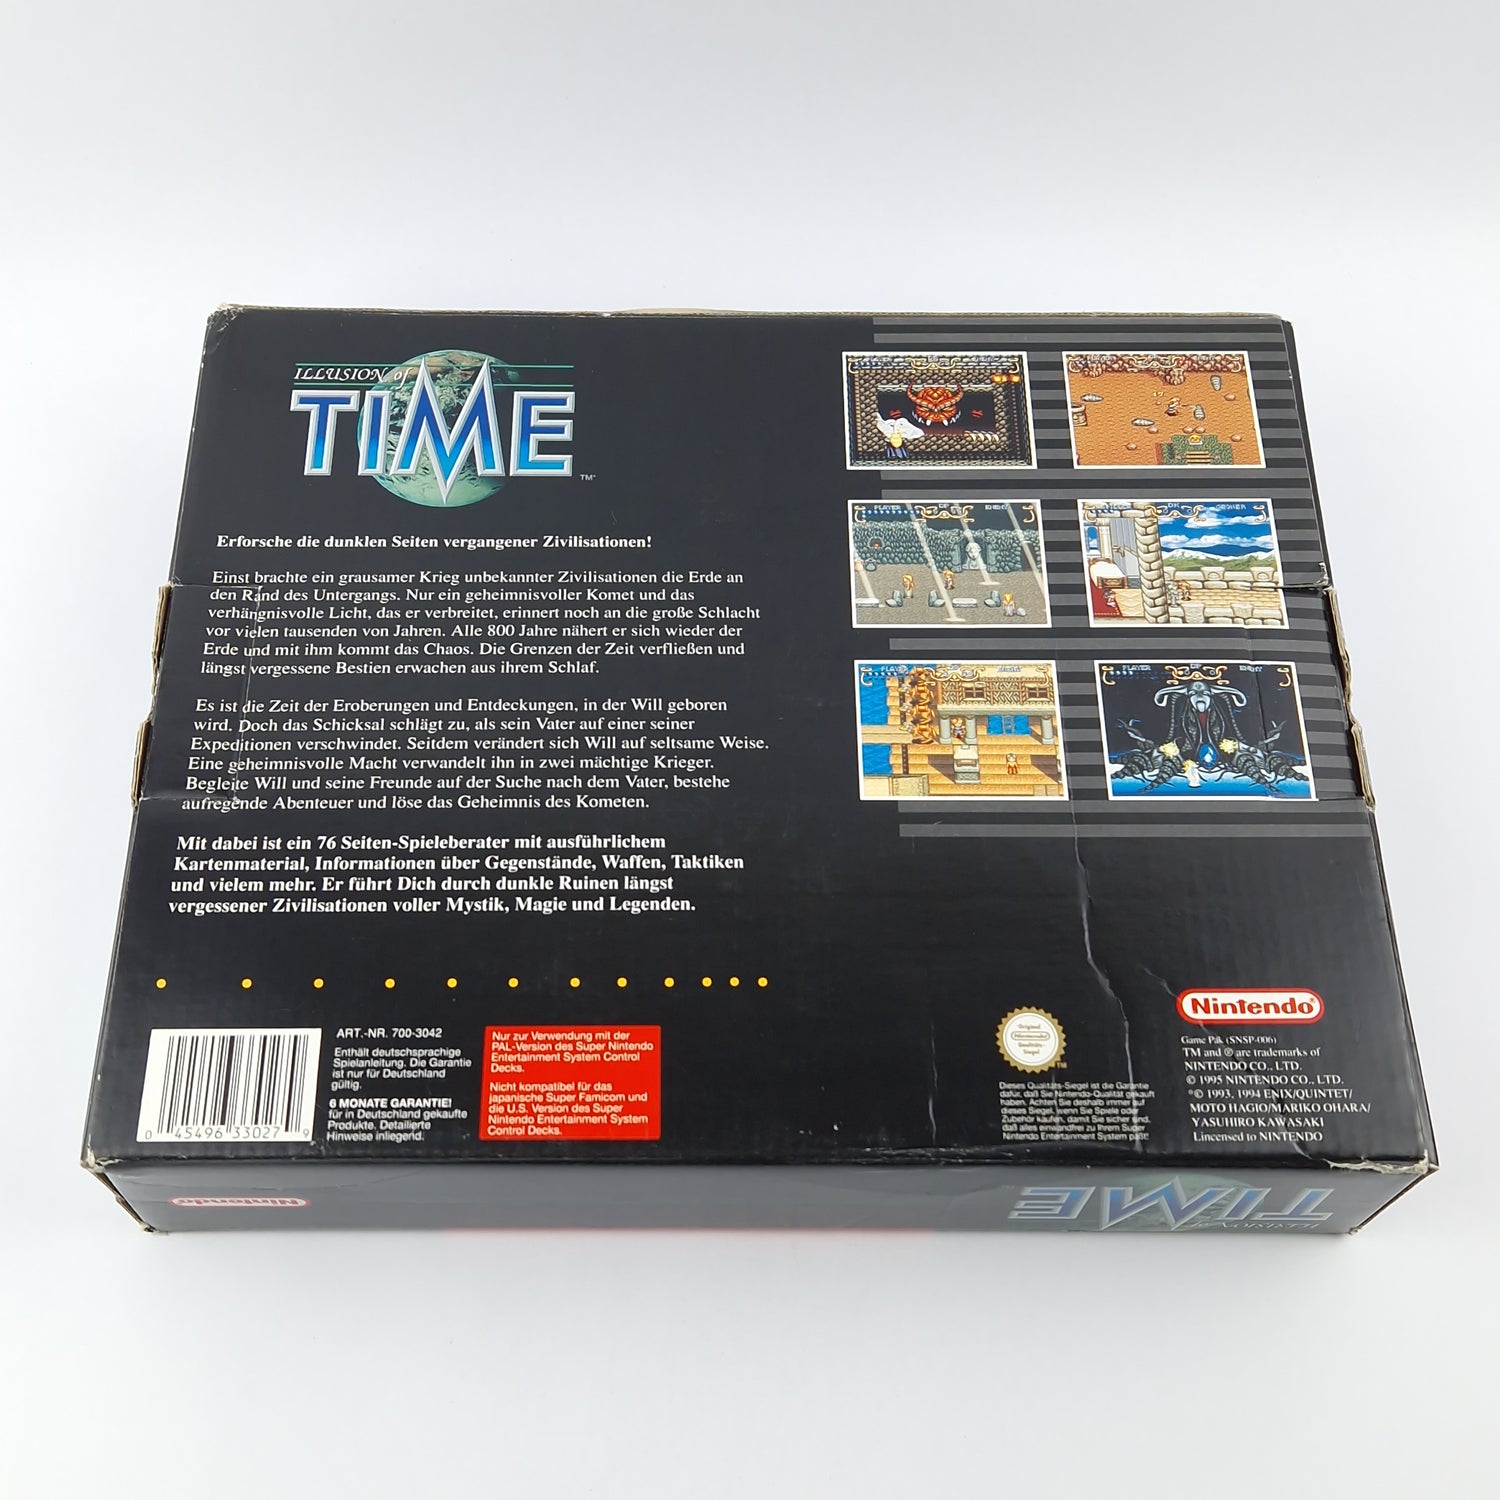 Super Nintendo game: iLLusion of Time - Module game advisor OVP / SNES PAL NOE